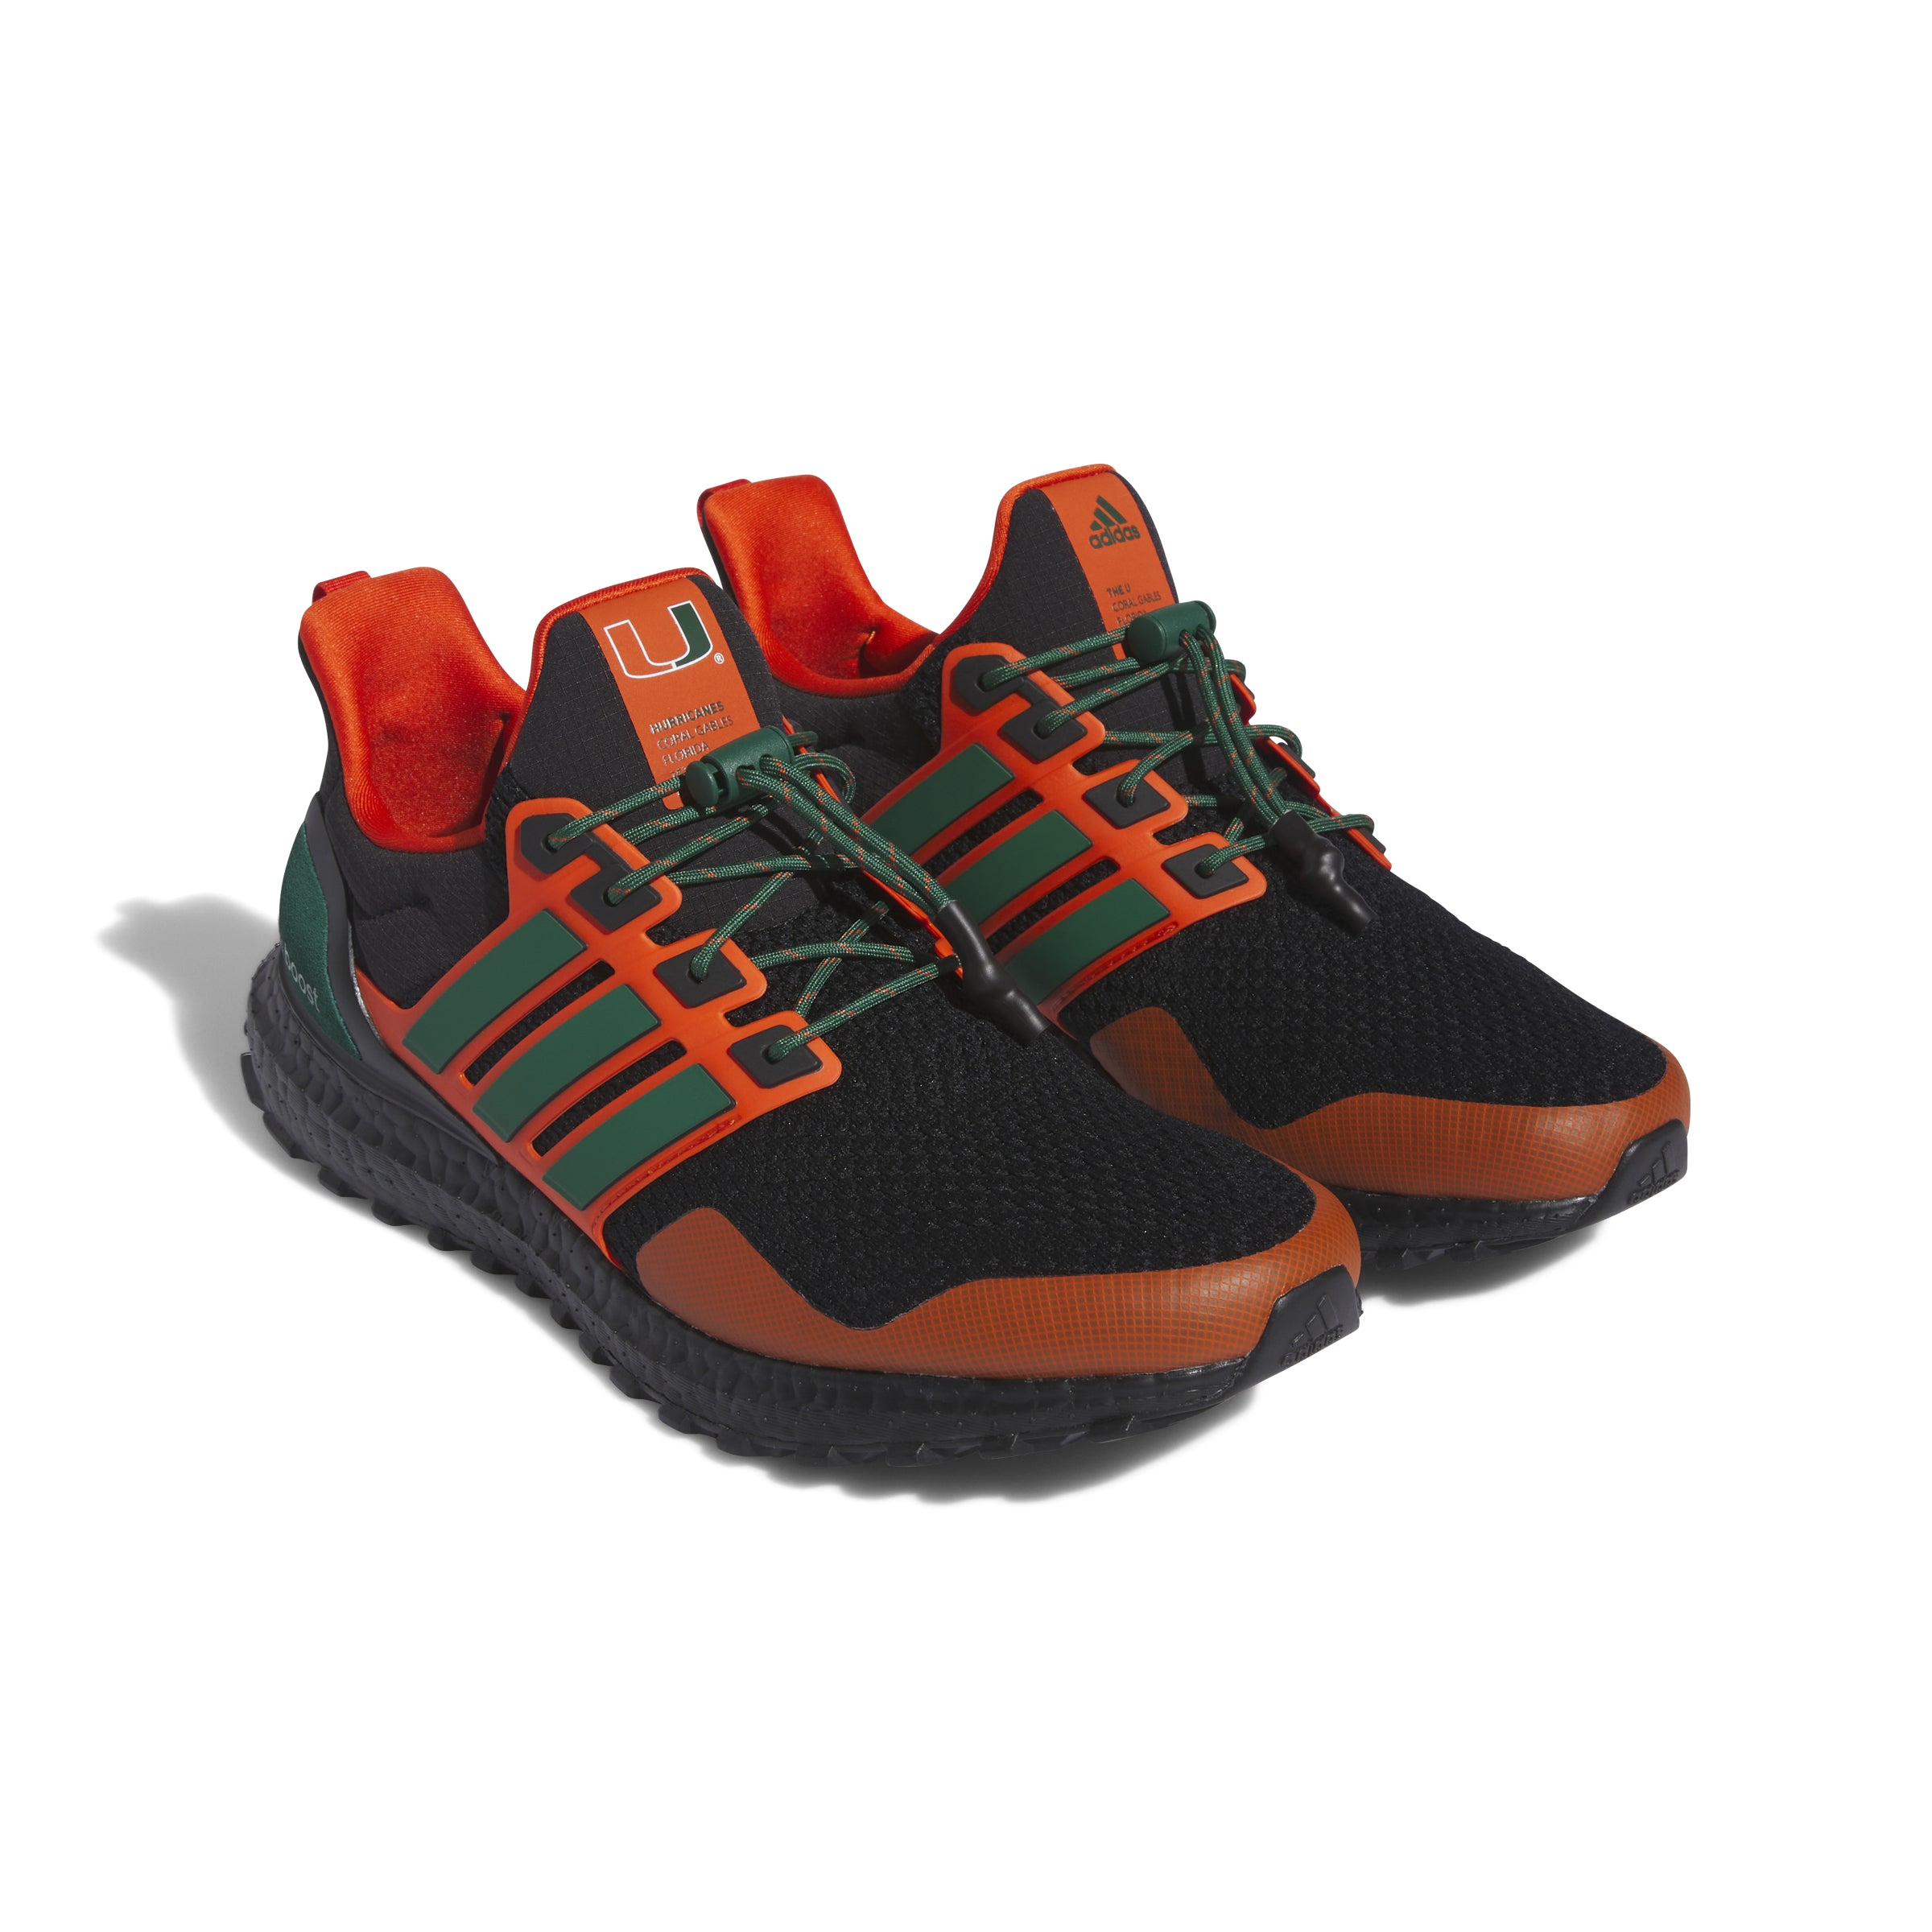 2023 Miami Hurricanes adidas Ultraboost 1.0  Shoes  /  Sneakers - Black/Orange